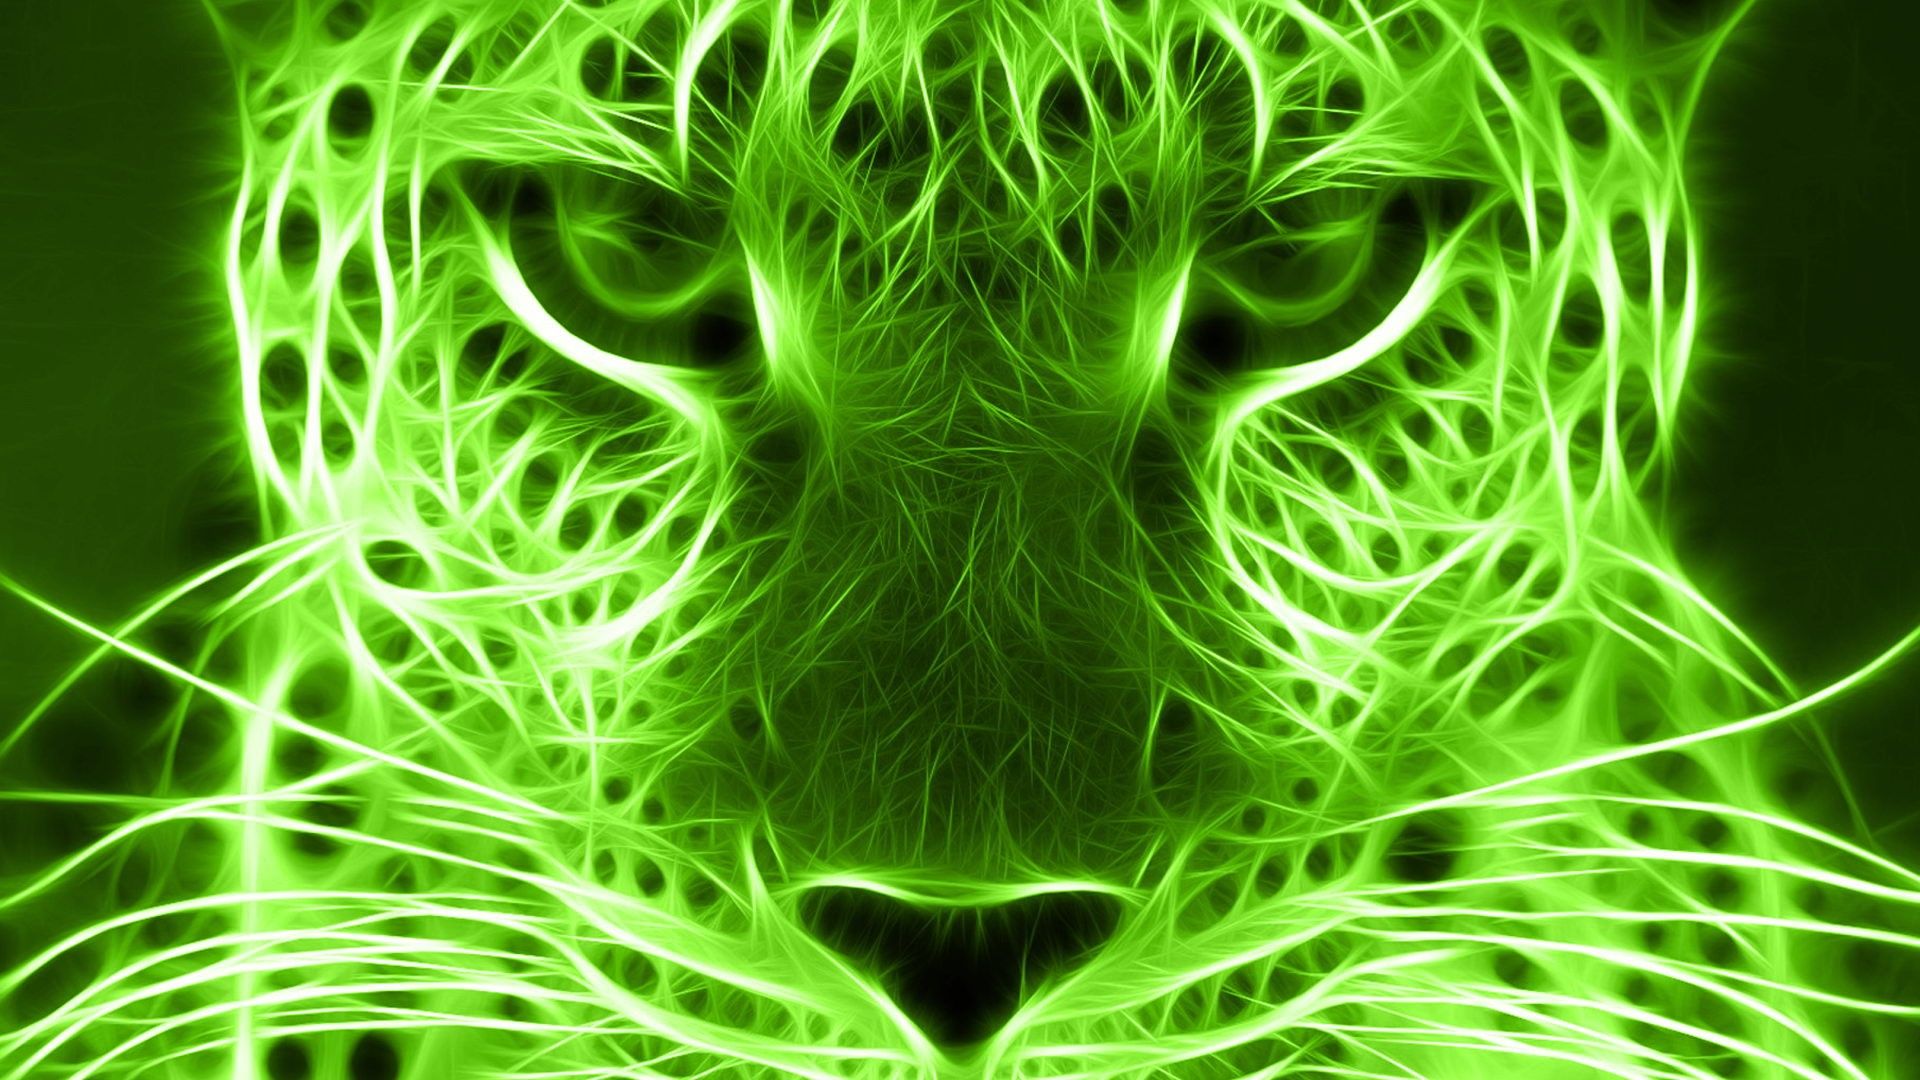 Neon Green Aesthetic Wallpaper HD